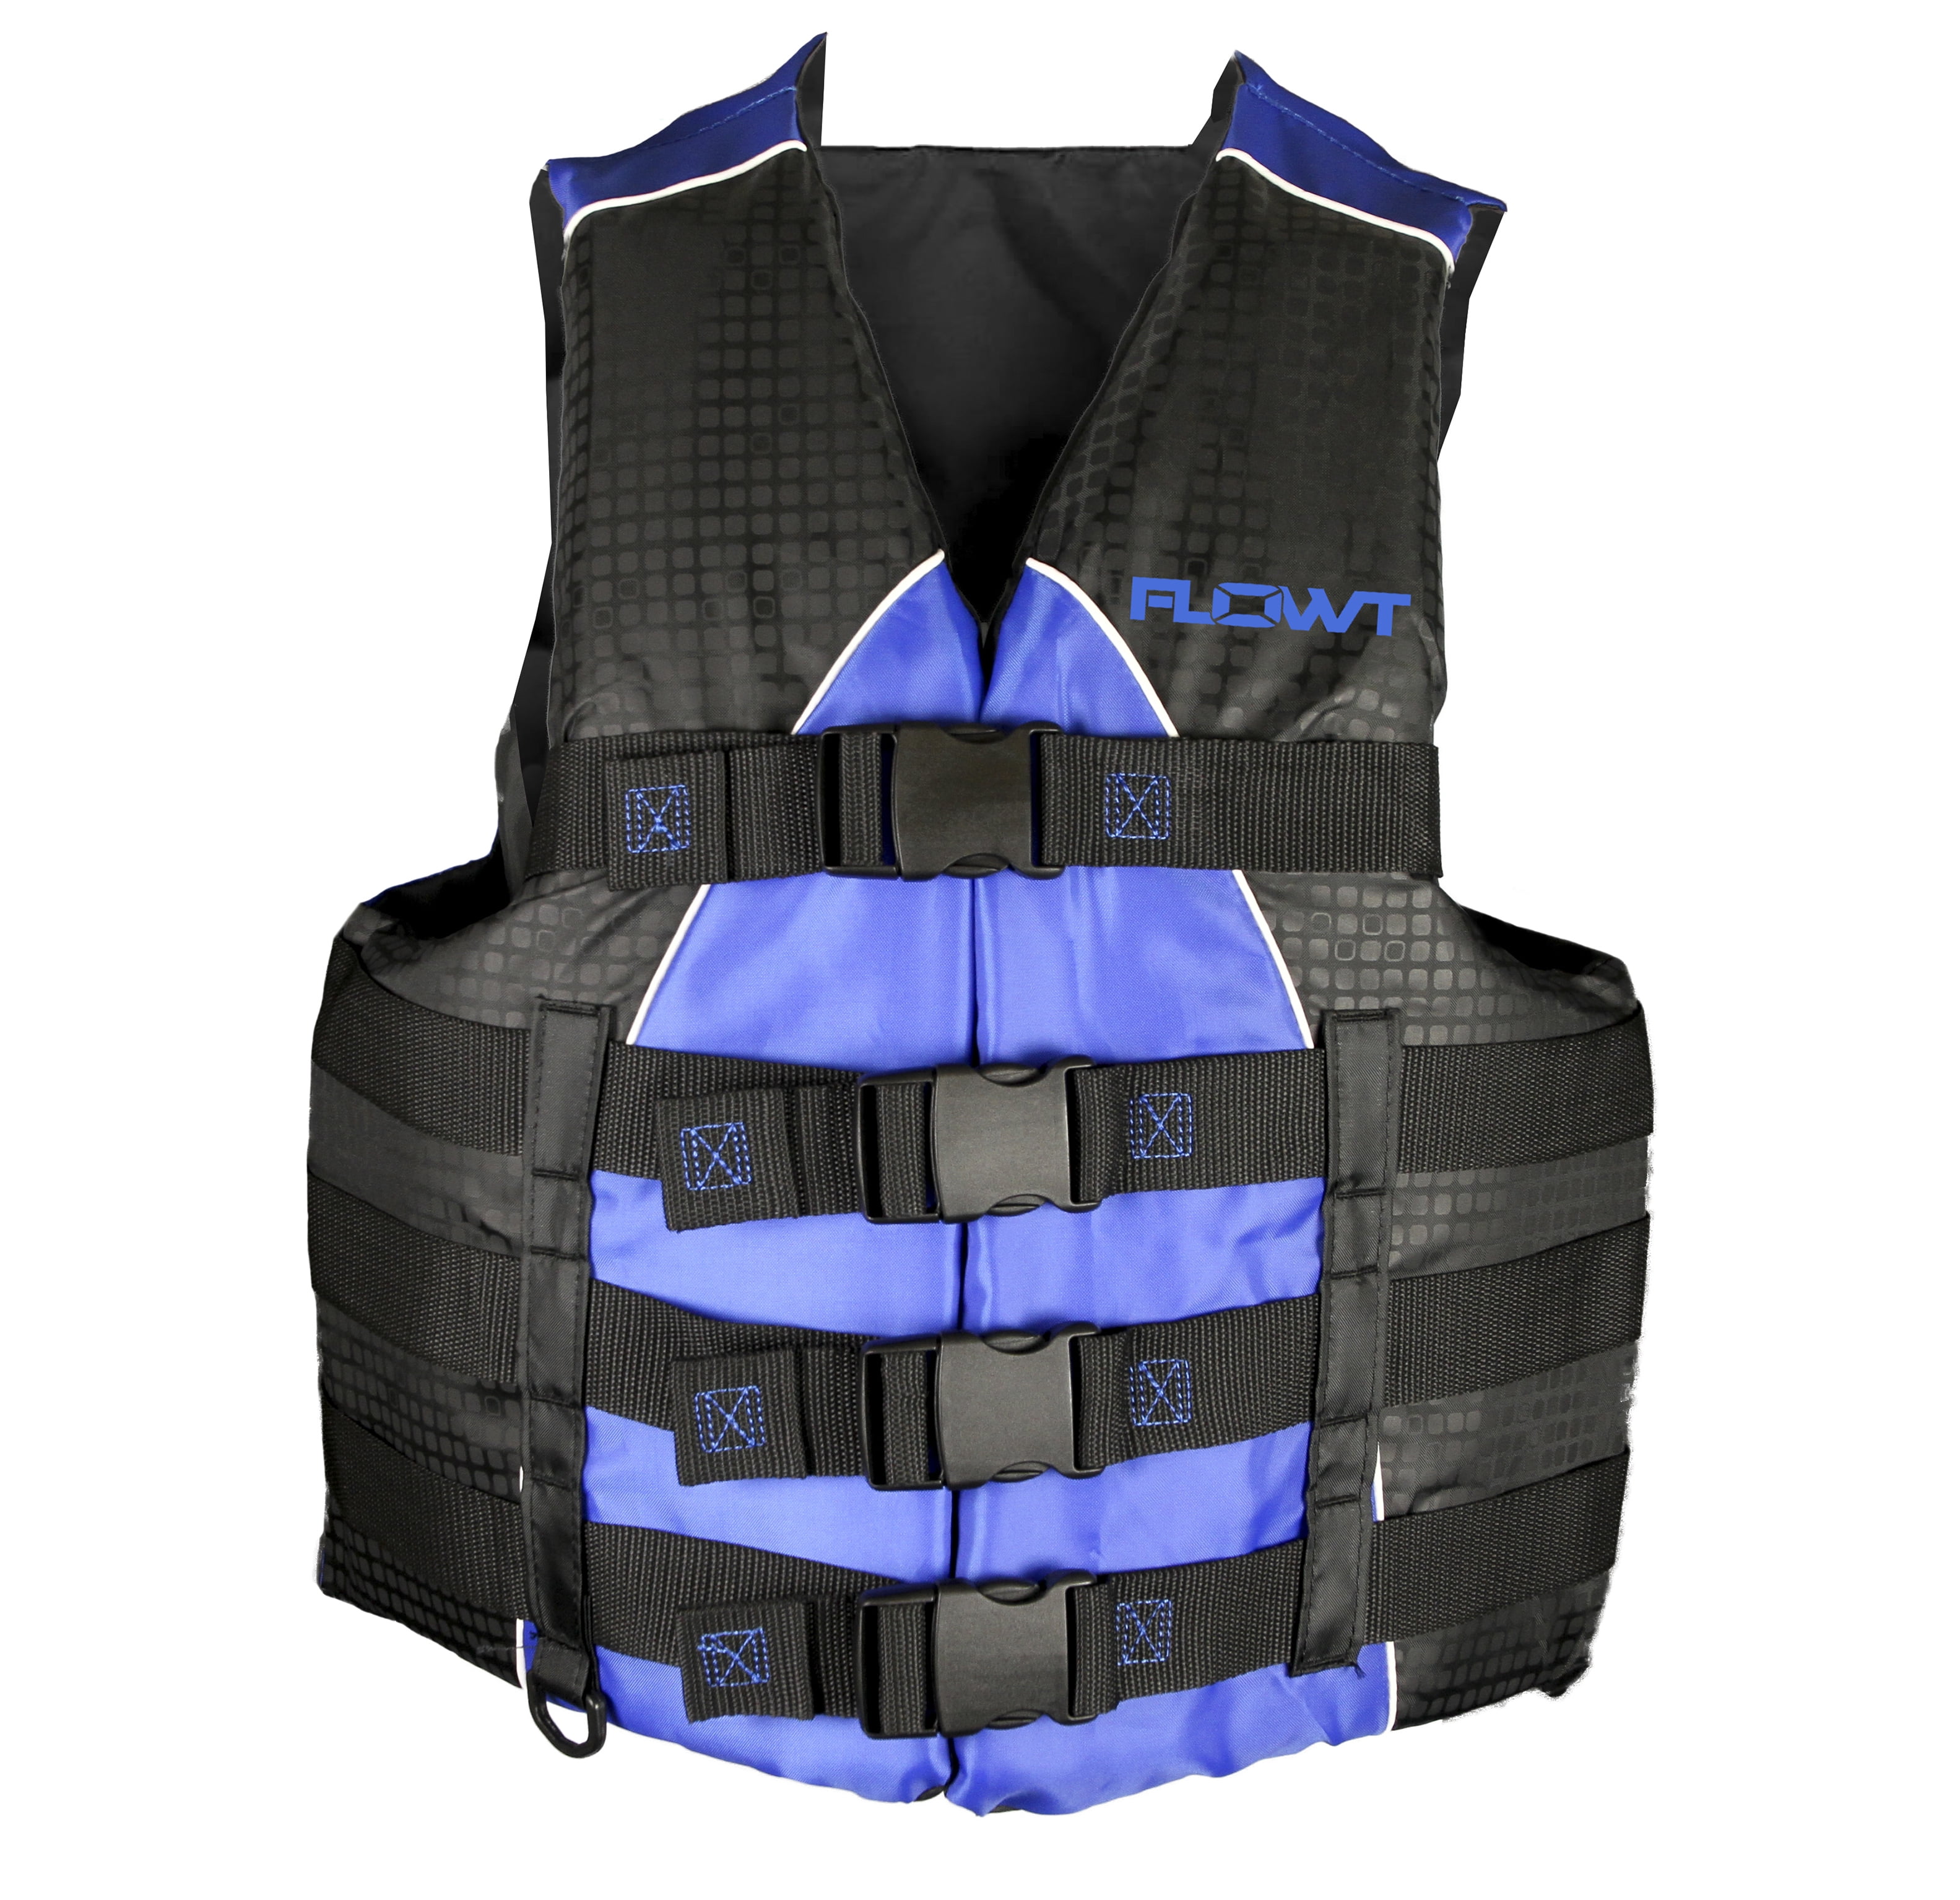 FLOWT Extreme Sport Life Vest - USCG Approved Type III PFD - Walmart.com